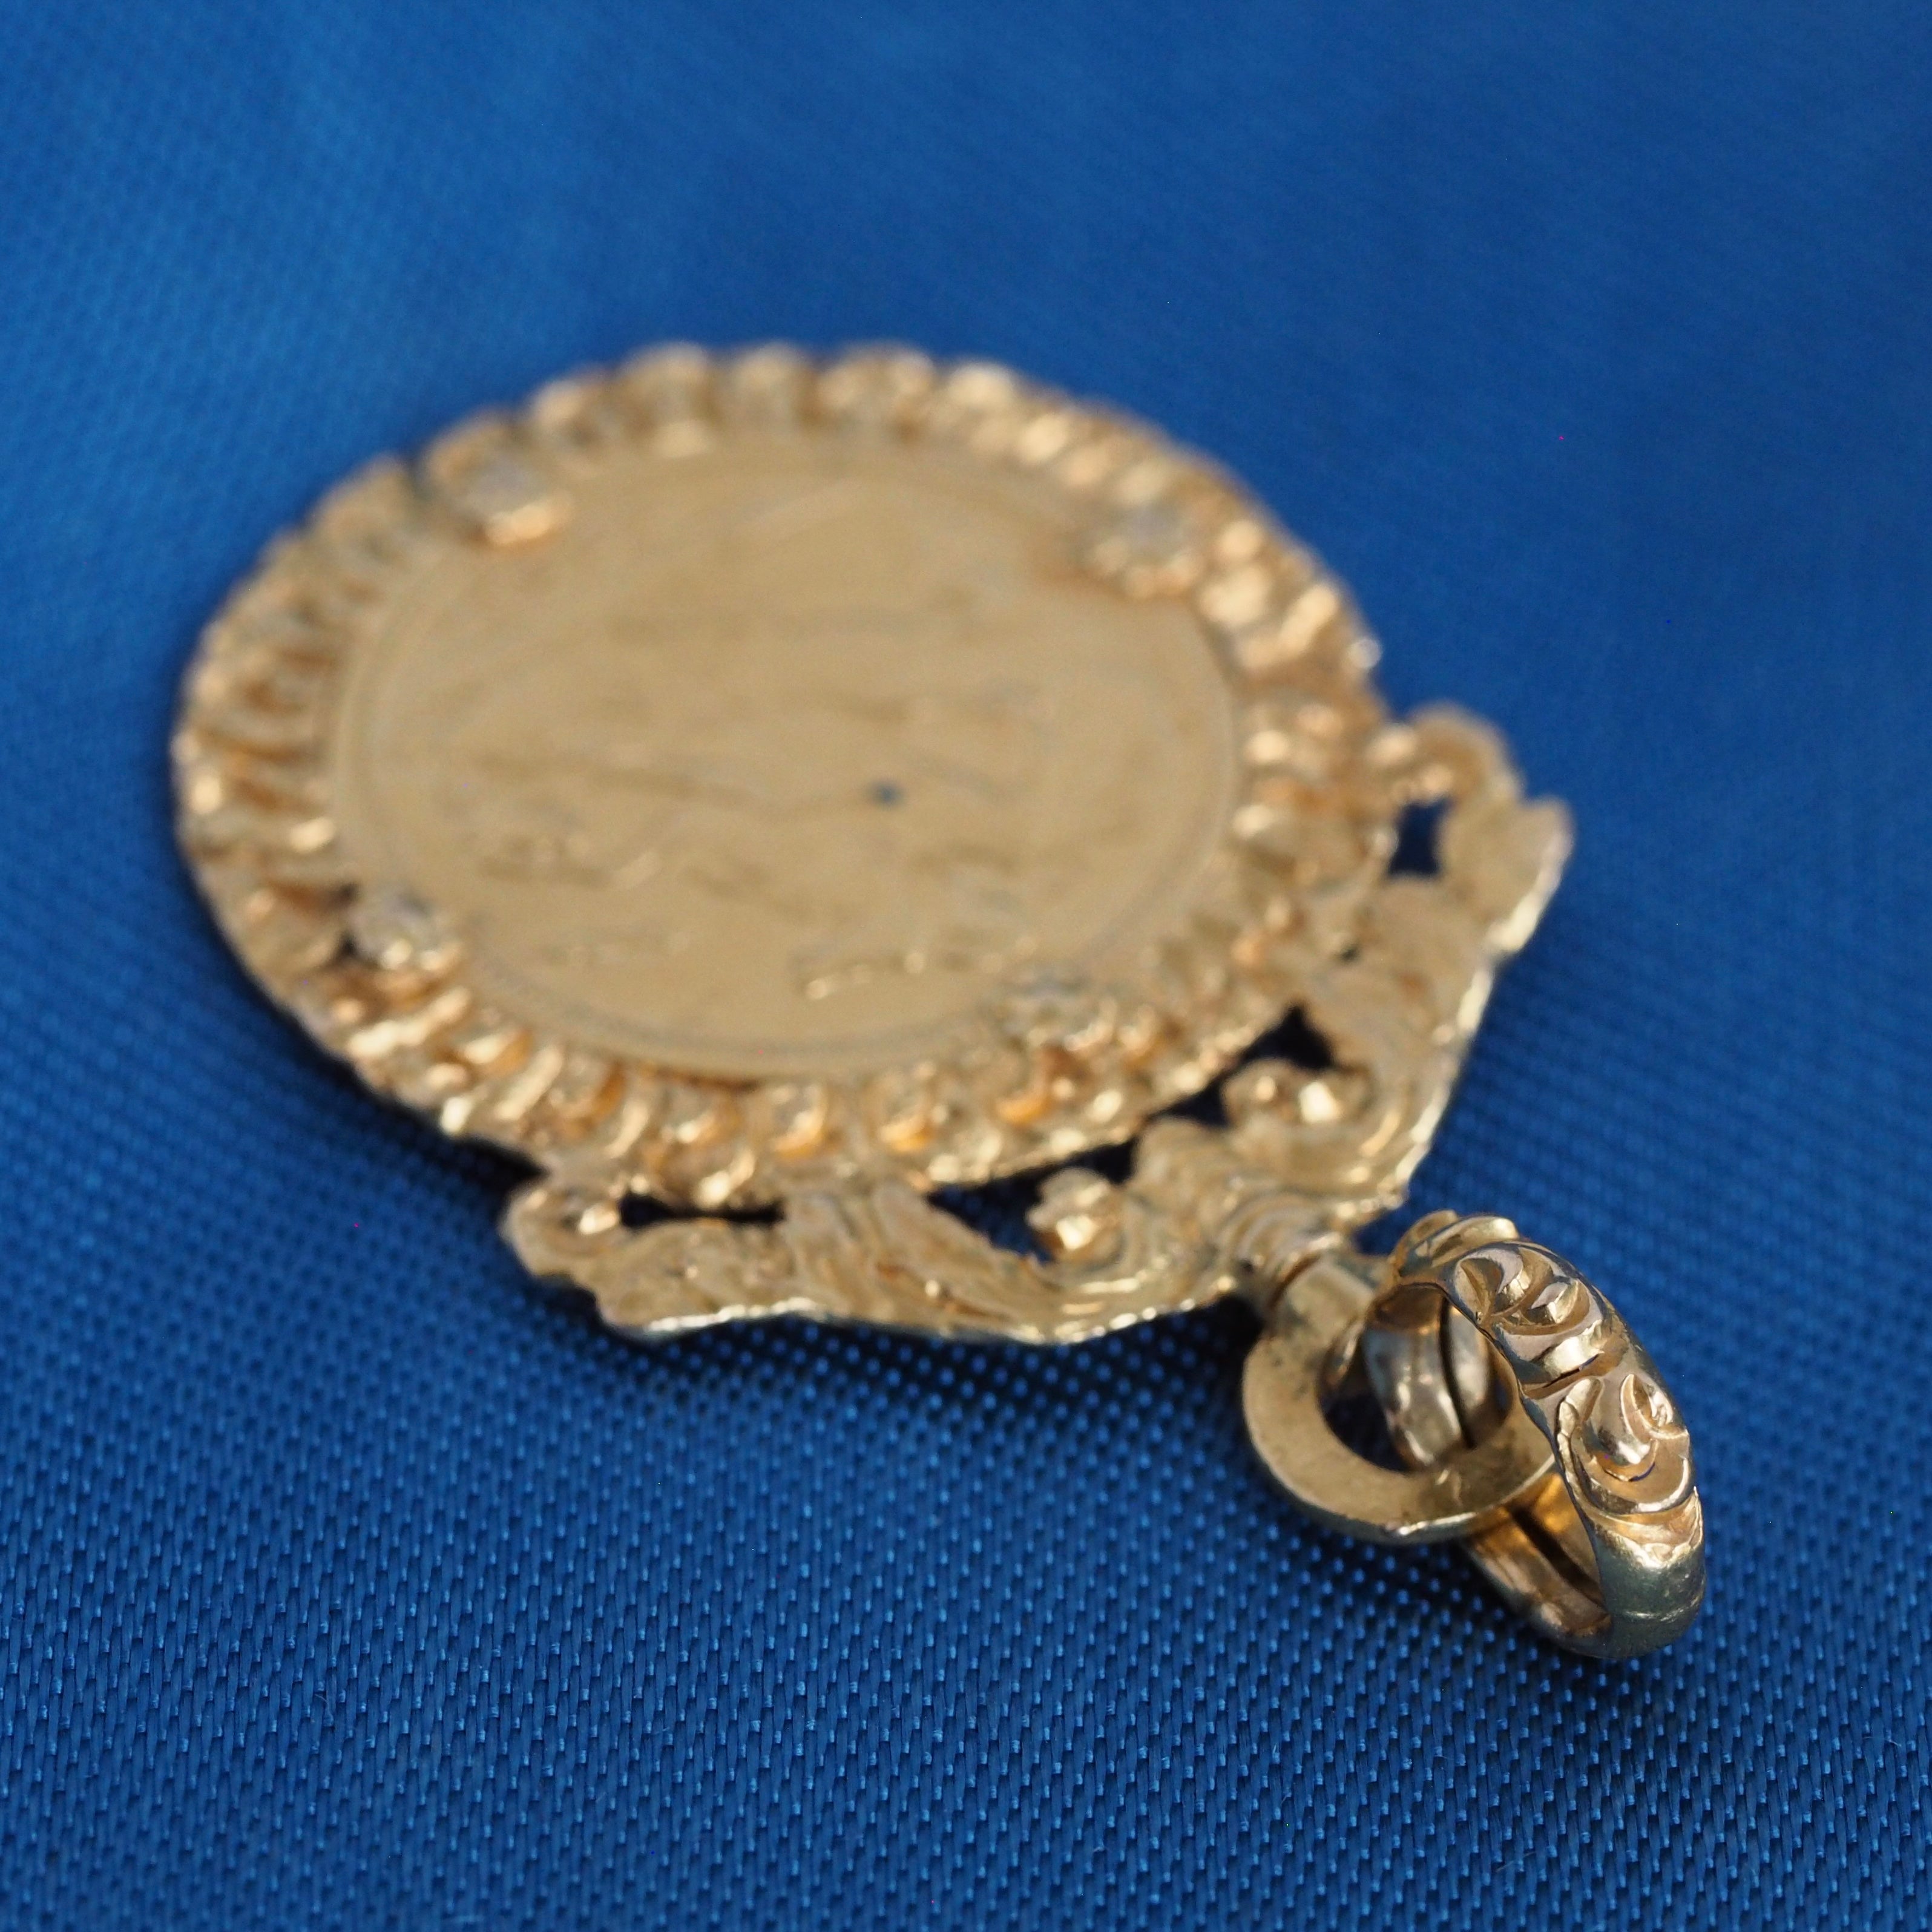 Antique Portuguese 22k Gold Queen Victoria Sovereign Coin Pendant c. 1895